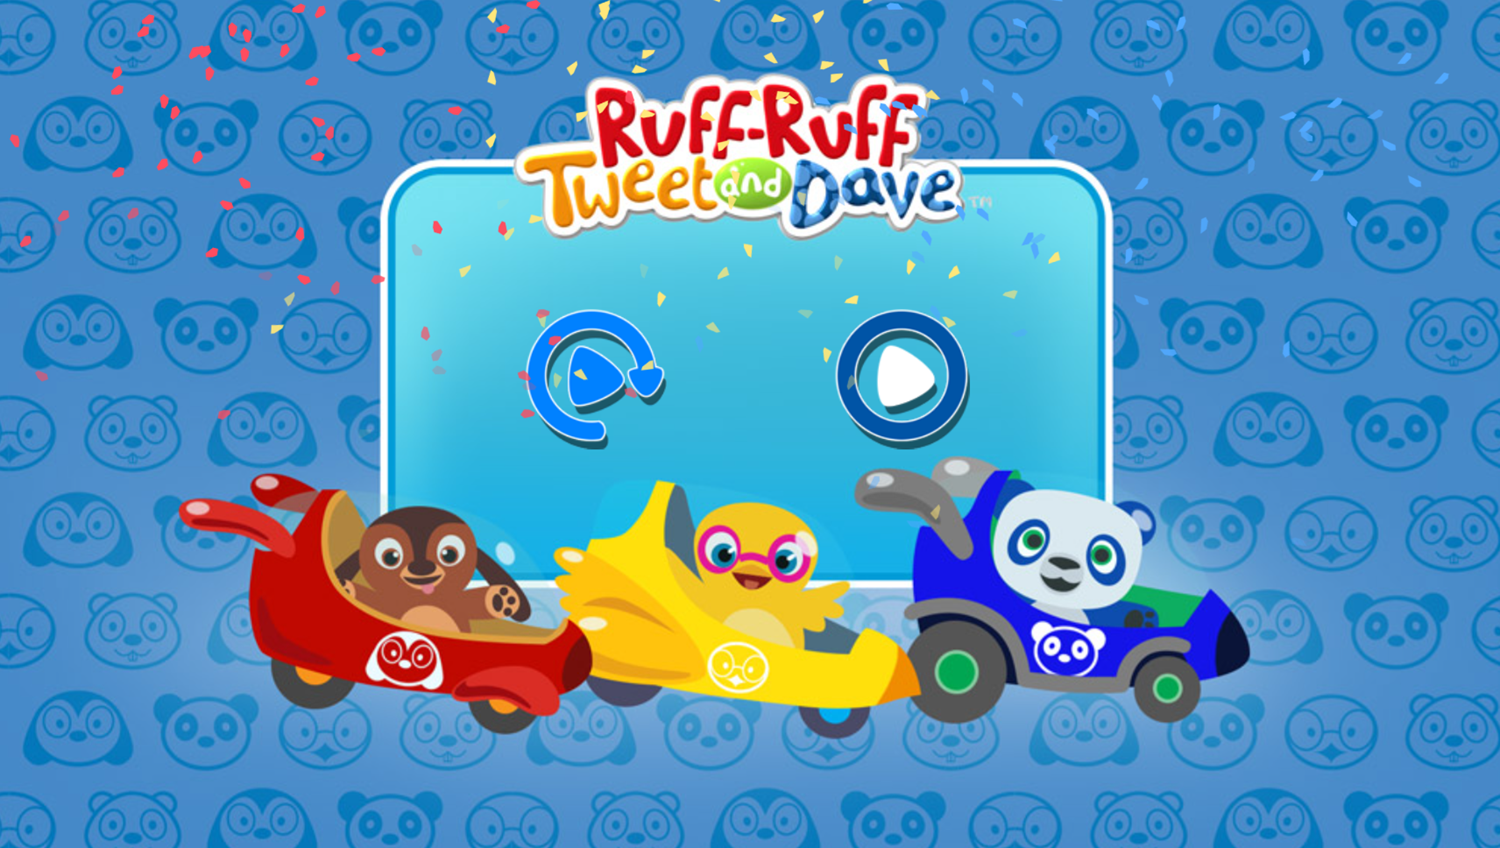 Ruff-Ruff Tweet and Dave Super Slide Game Race Result Screenshot.